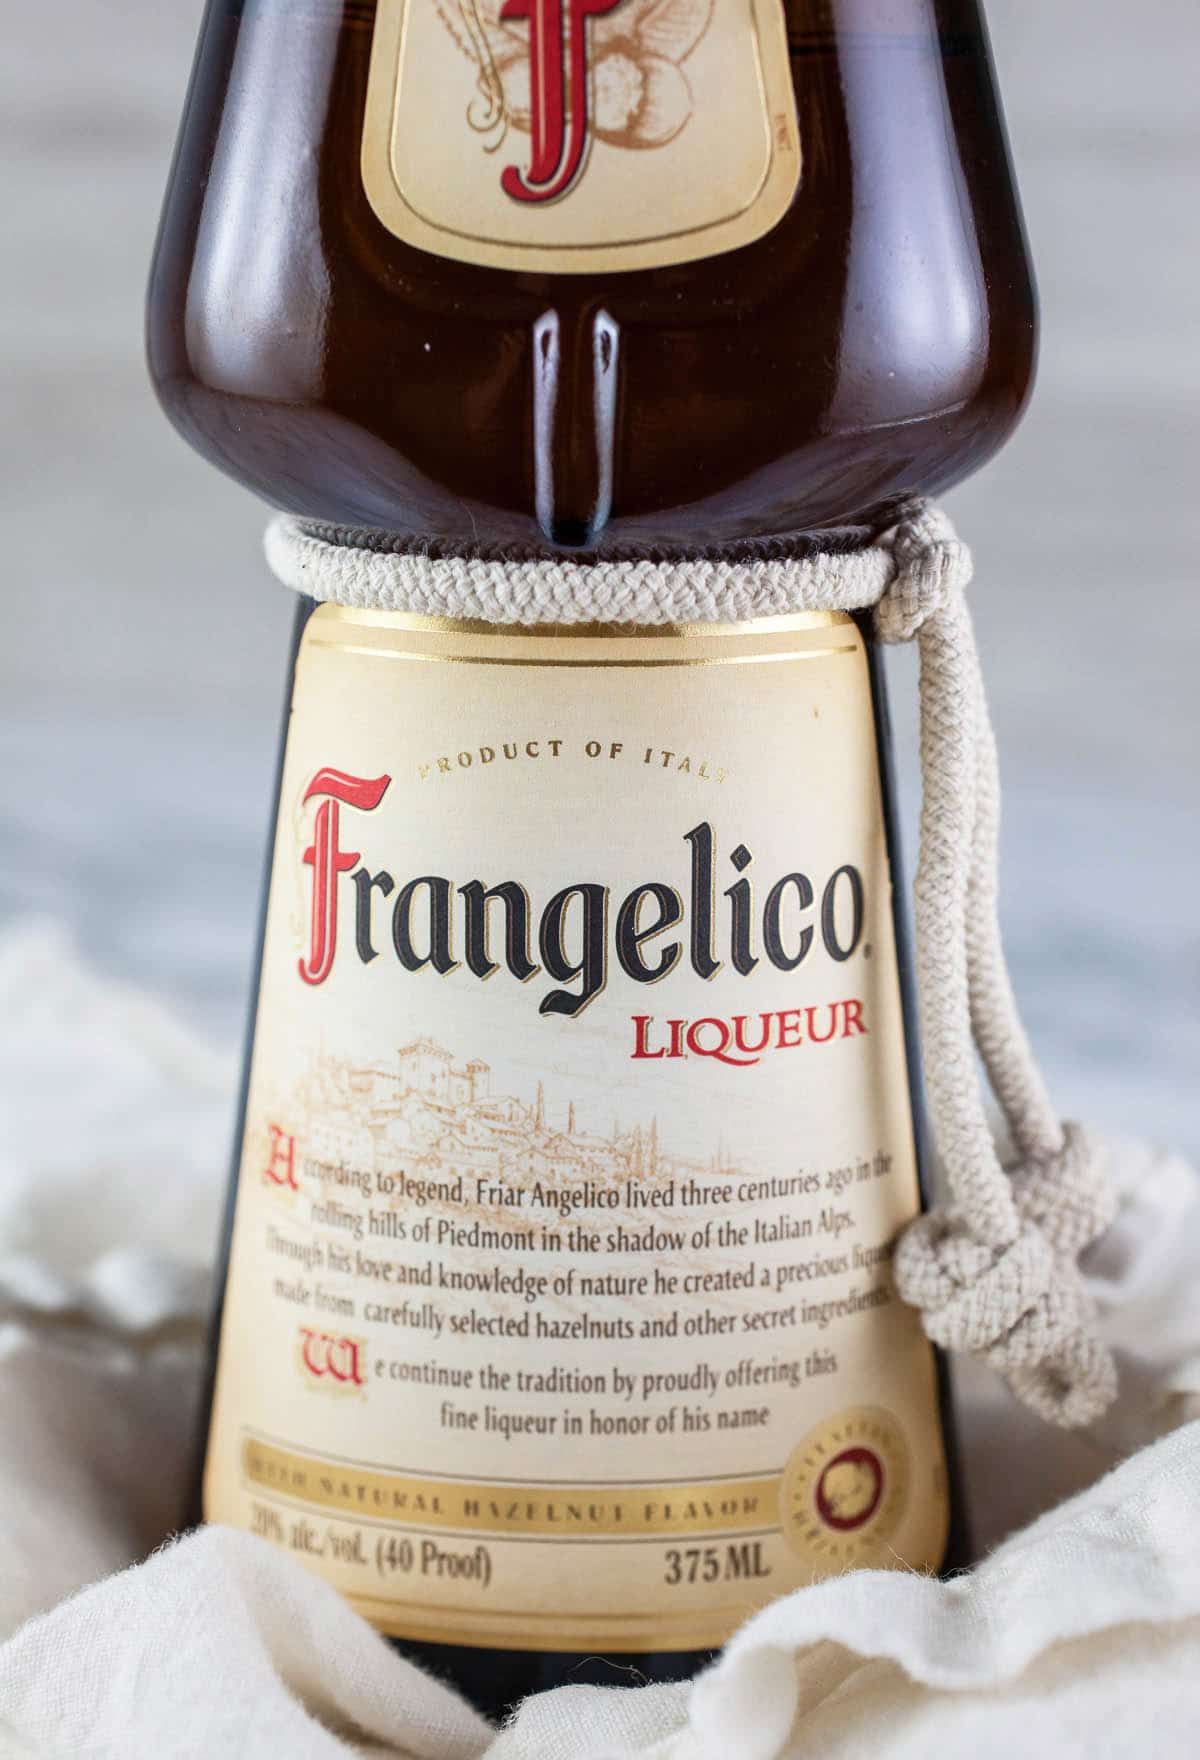 Bottle of Frangelico liqueur on white cloth.